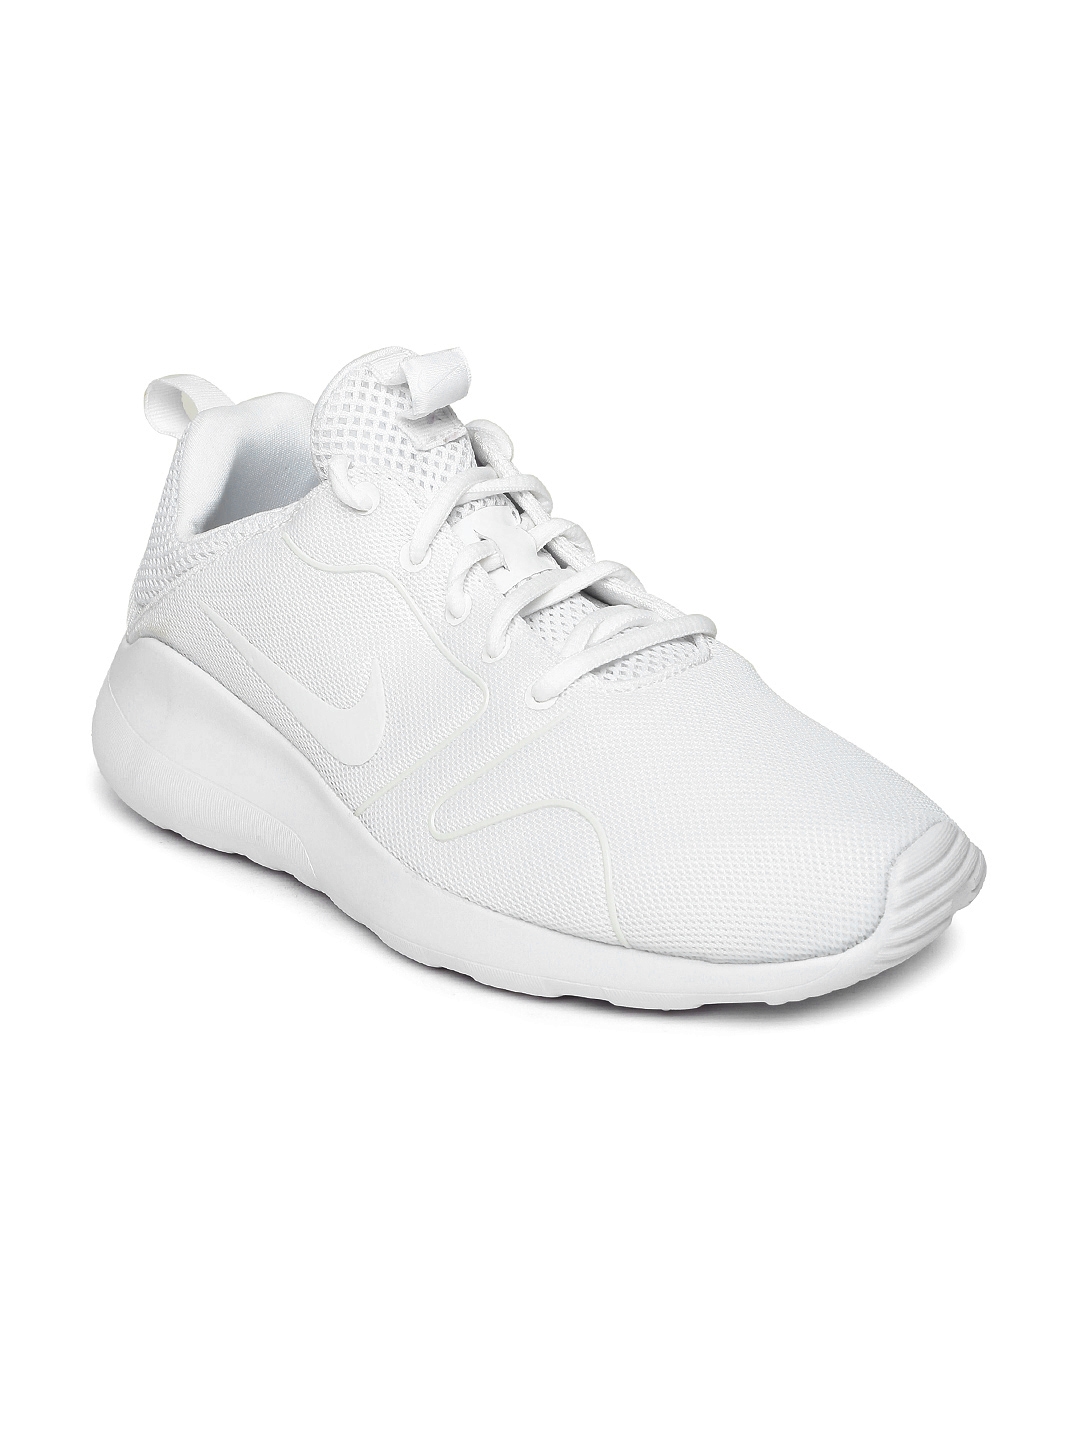 Buy Nike Men White Kaishi 2.0 Sneakers 